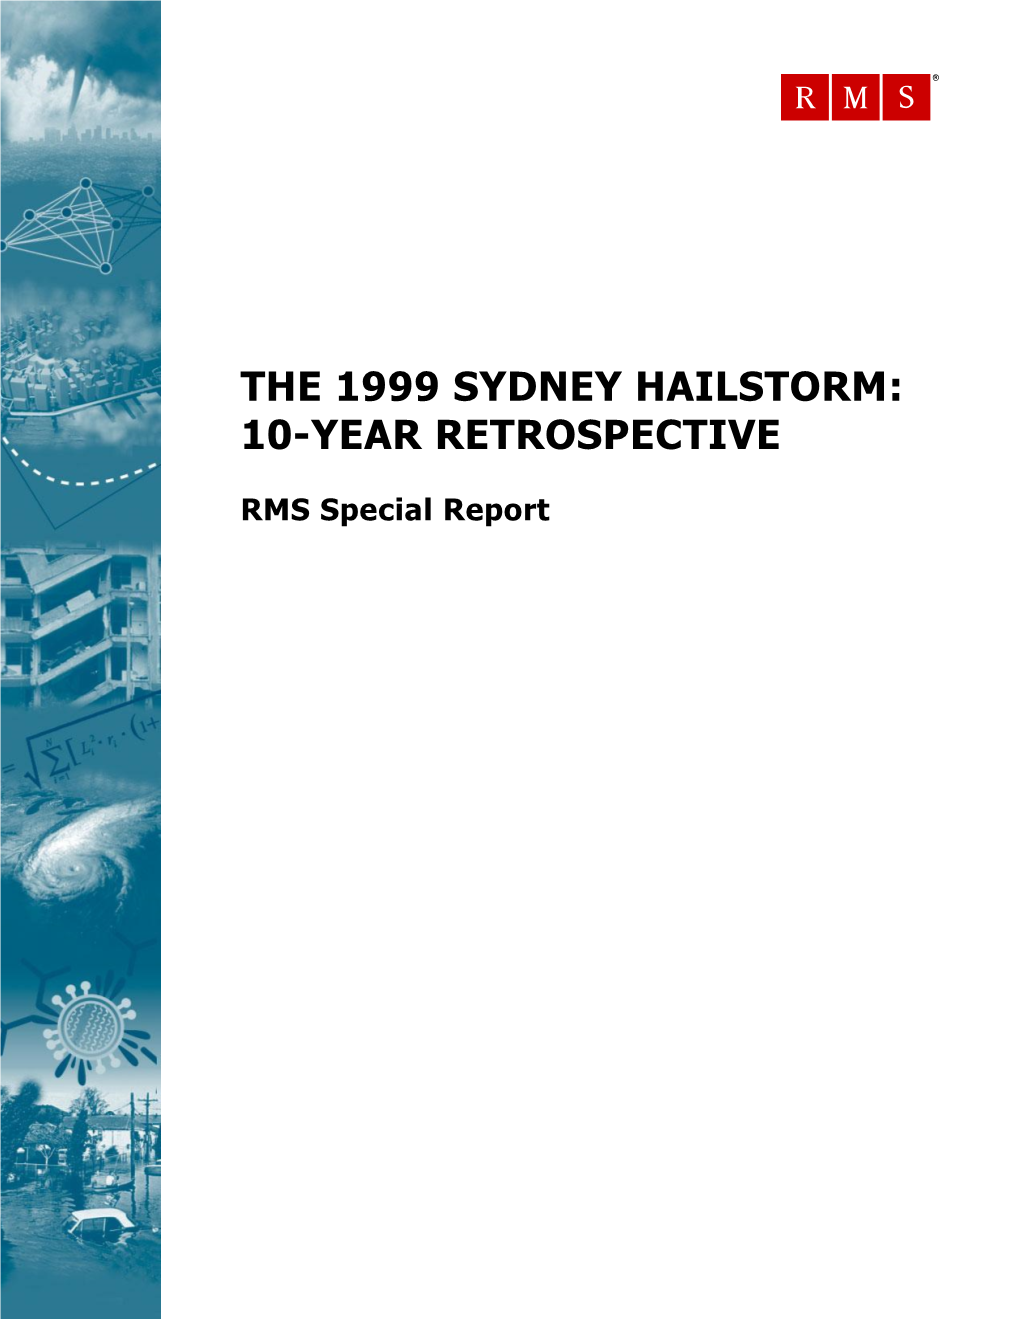 1999 Sydney Hailstorm: 10-Year Retrospective